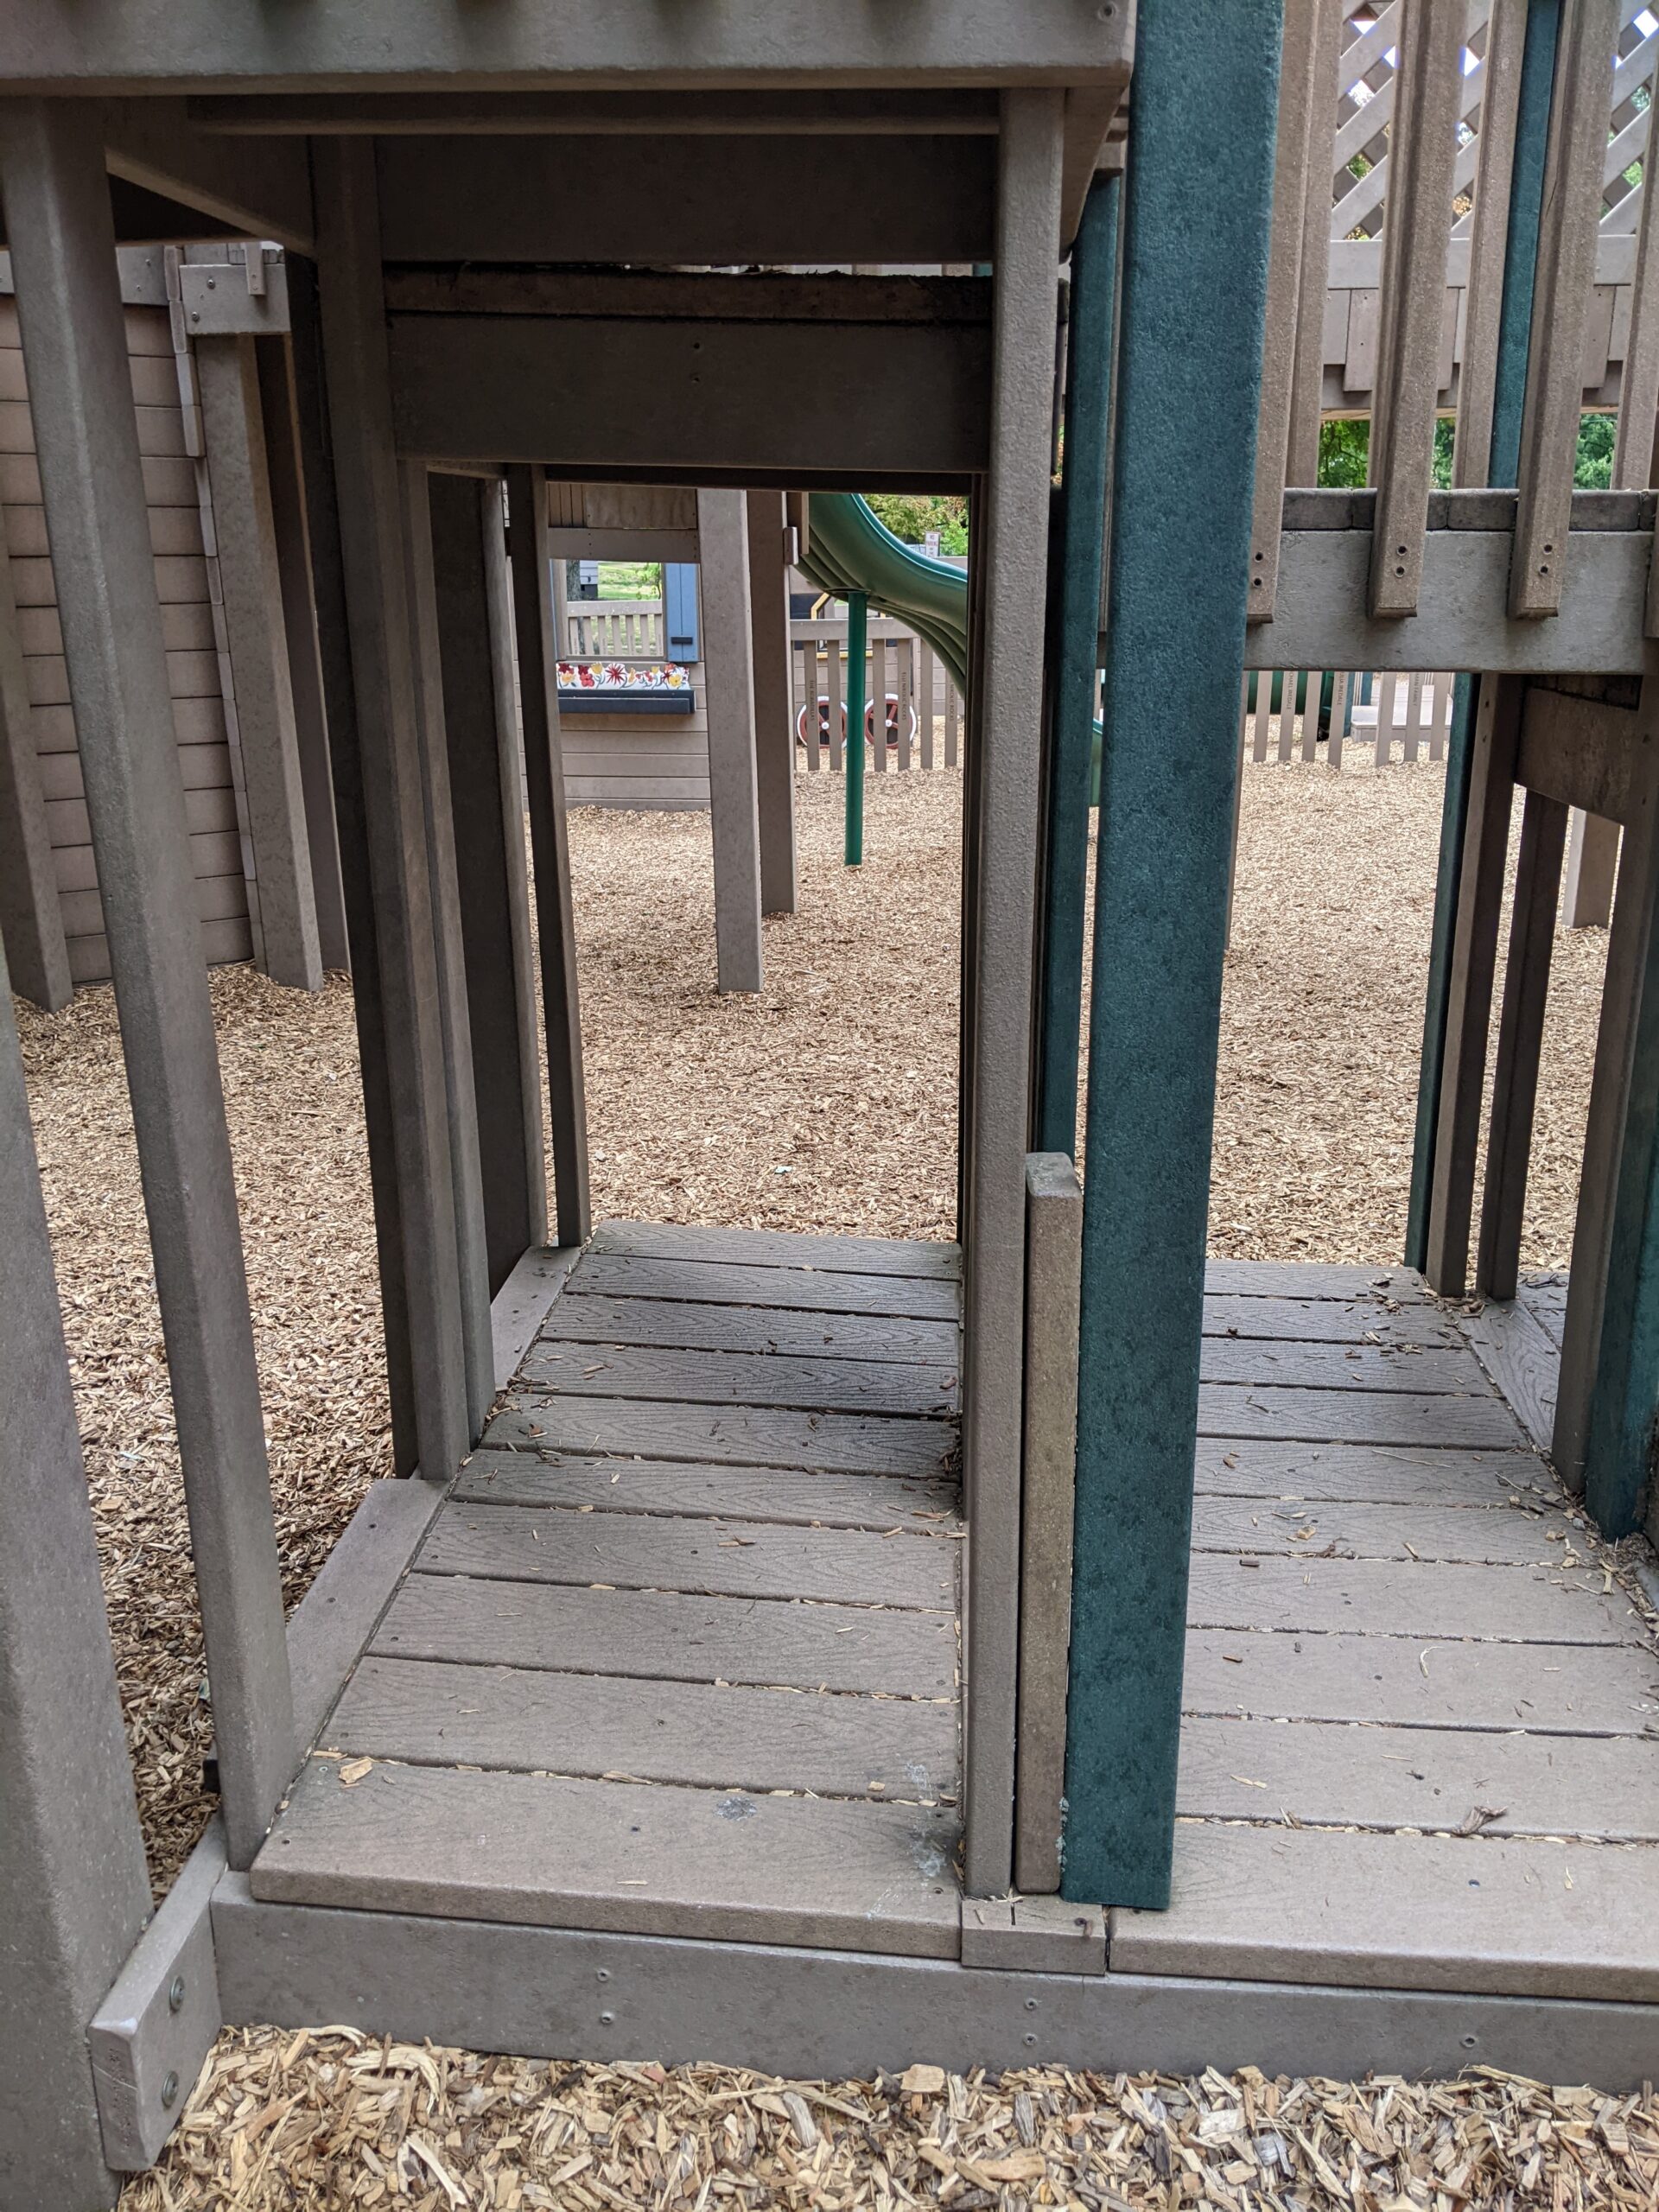 Frank Fullerton Memorial Park Playground in Moorestown NJ - SHADY - spot under castle stairs - spot 2